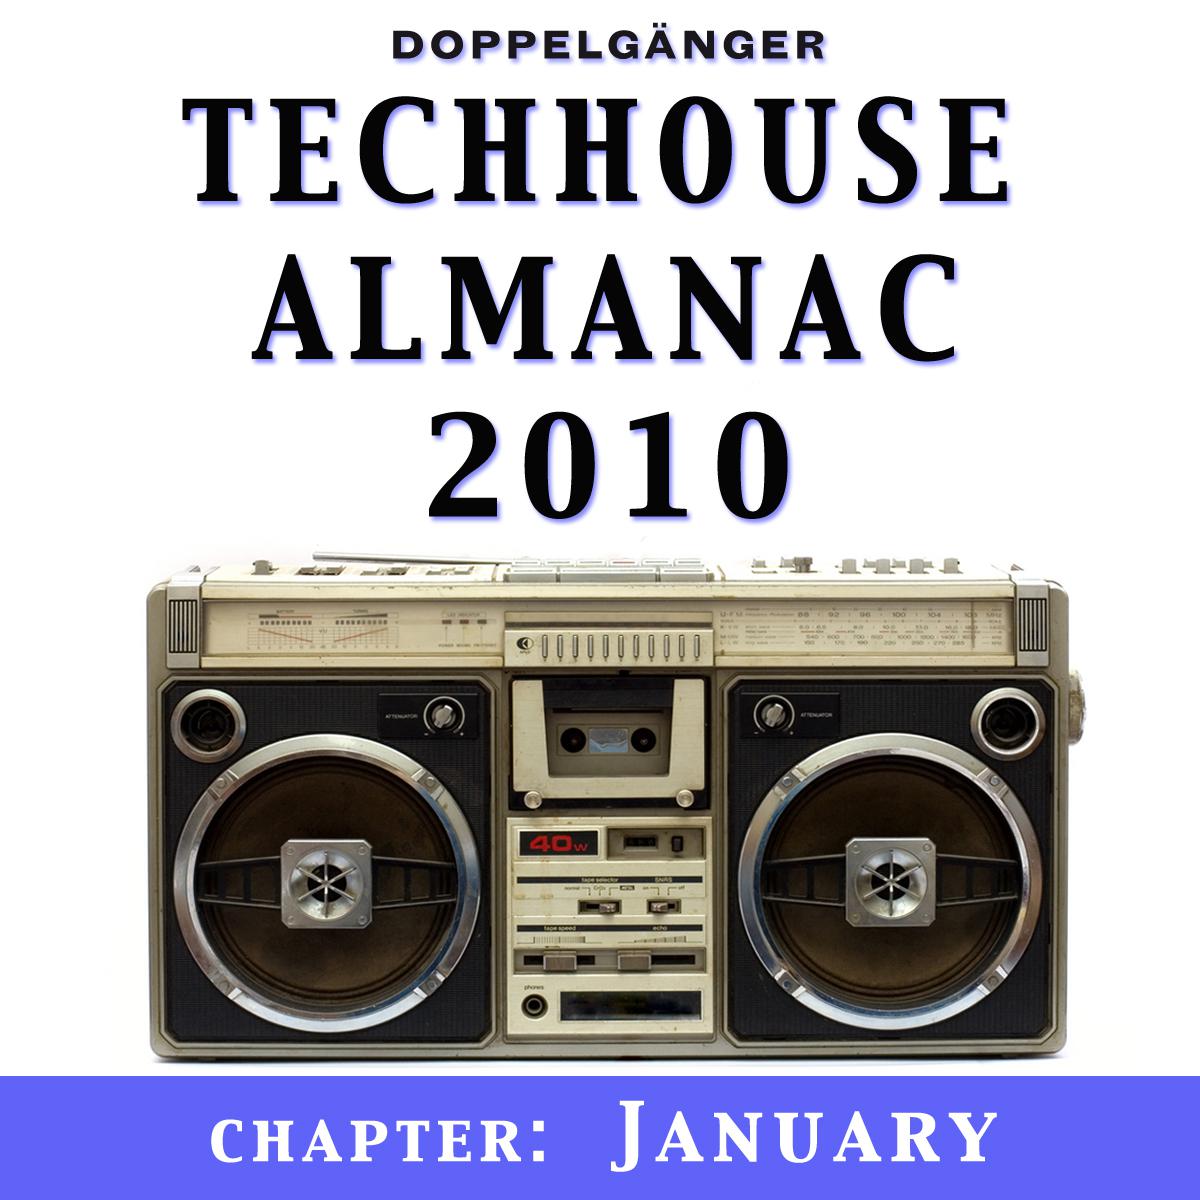 Techhouse Almanac 2010 - Chapter: January